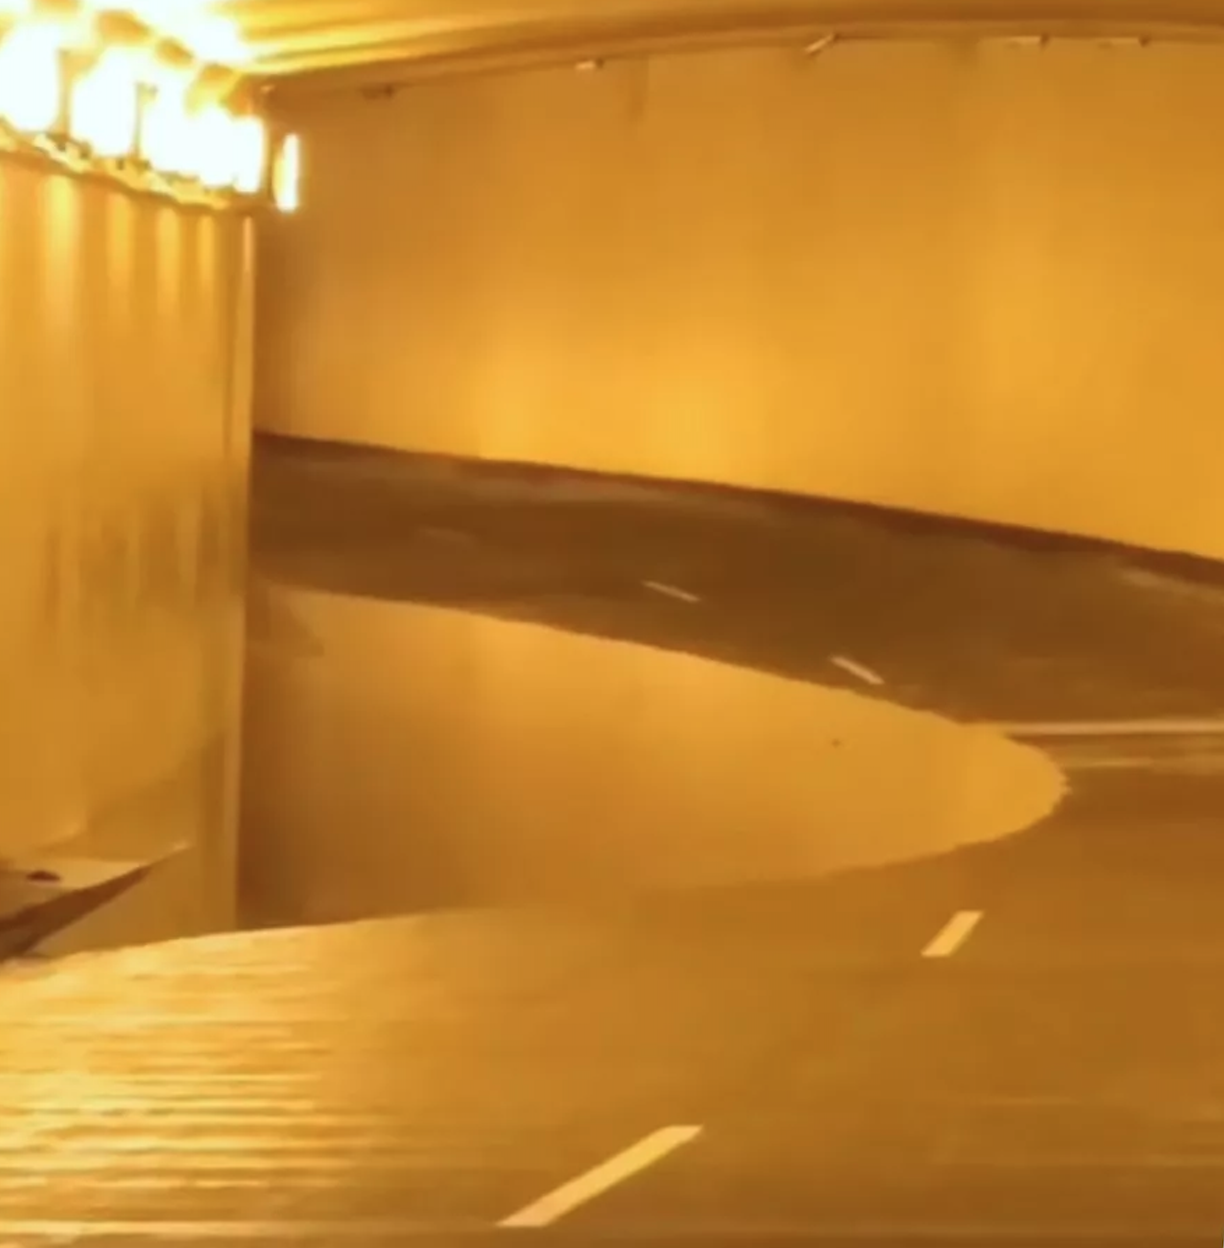 Tunnel optical illusion